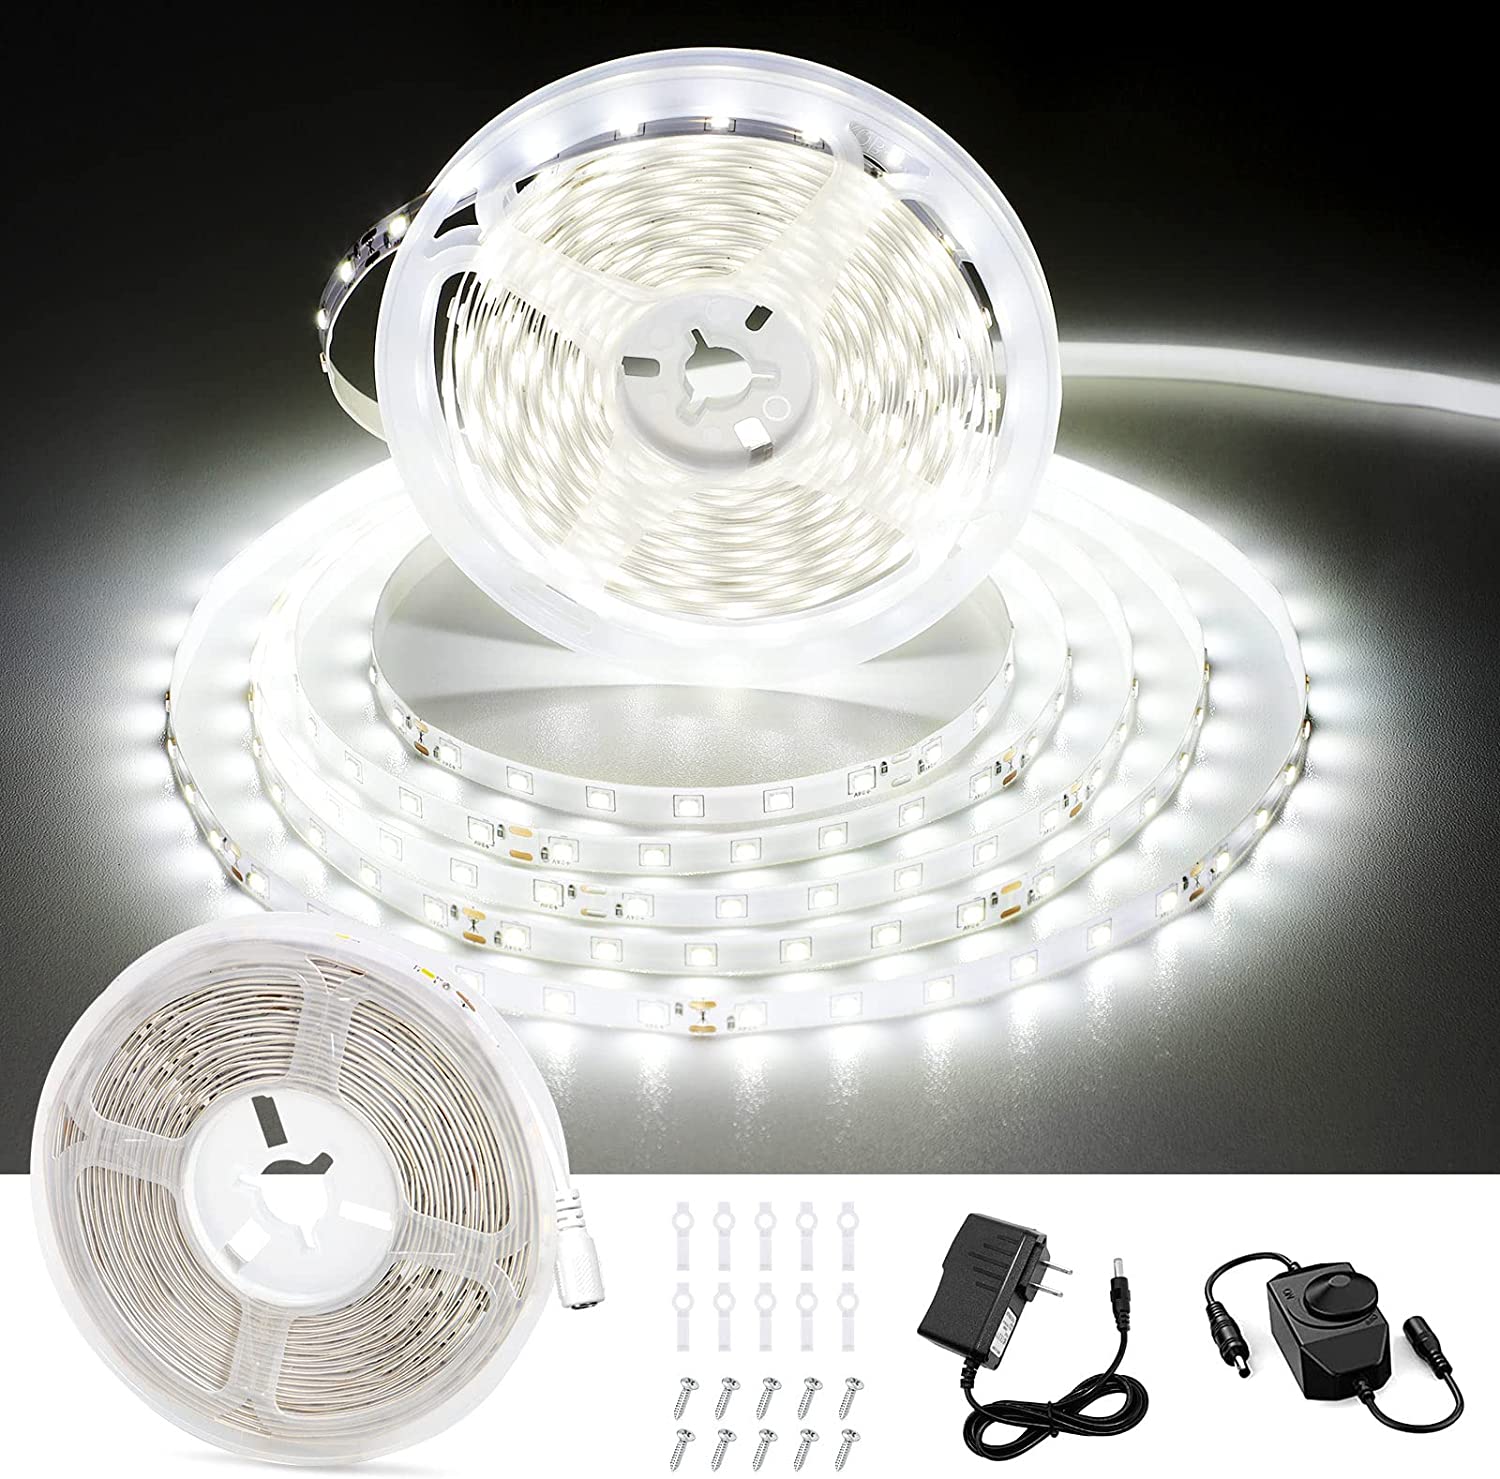 CT CAPETRONIX Adjustable White Strip Lights, 16.4-Foot